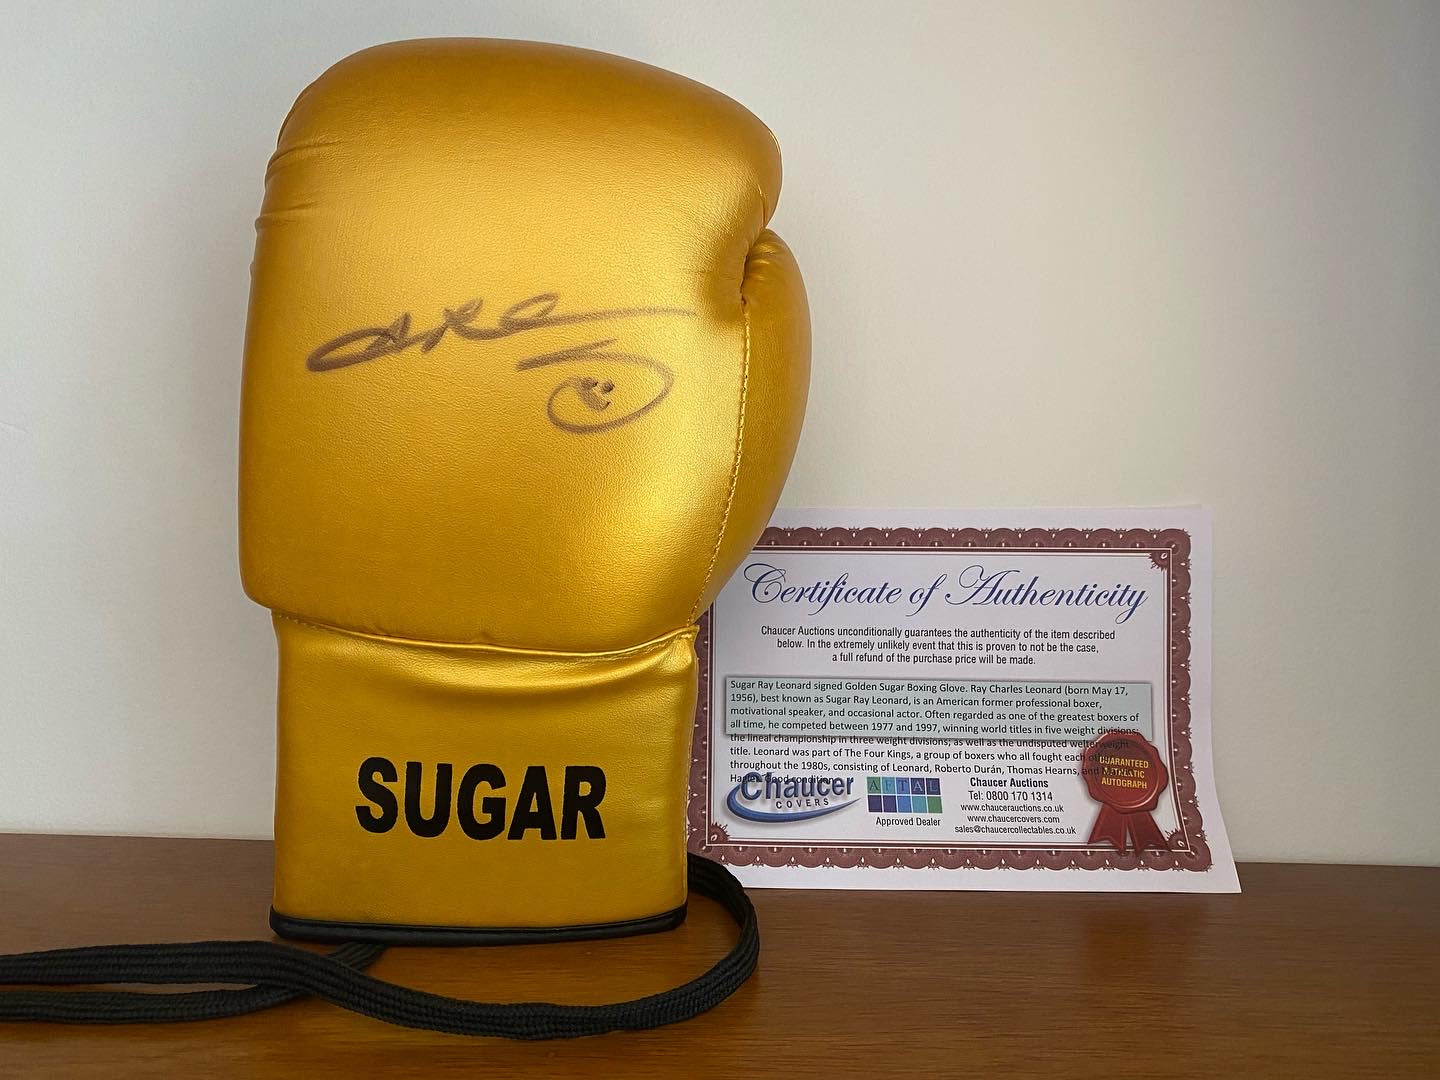 Sugar Ray Leonard signed Golden Sugar Boxing Glove.